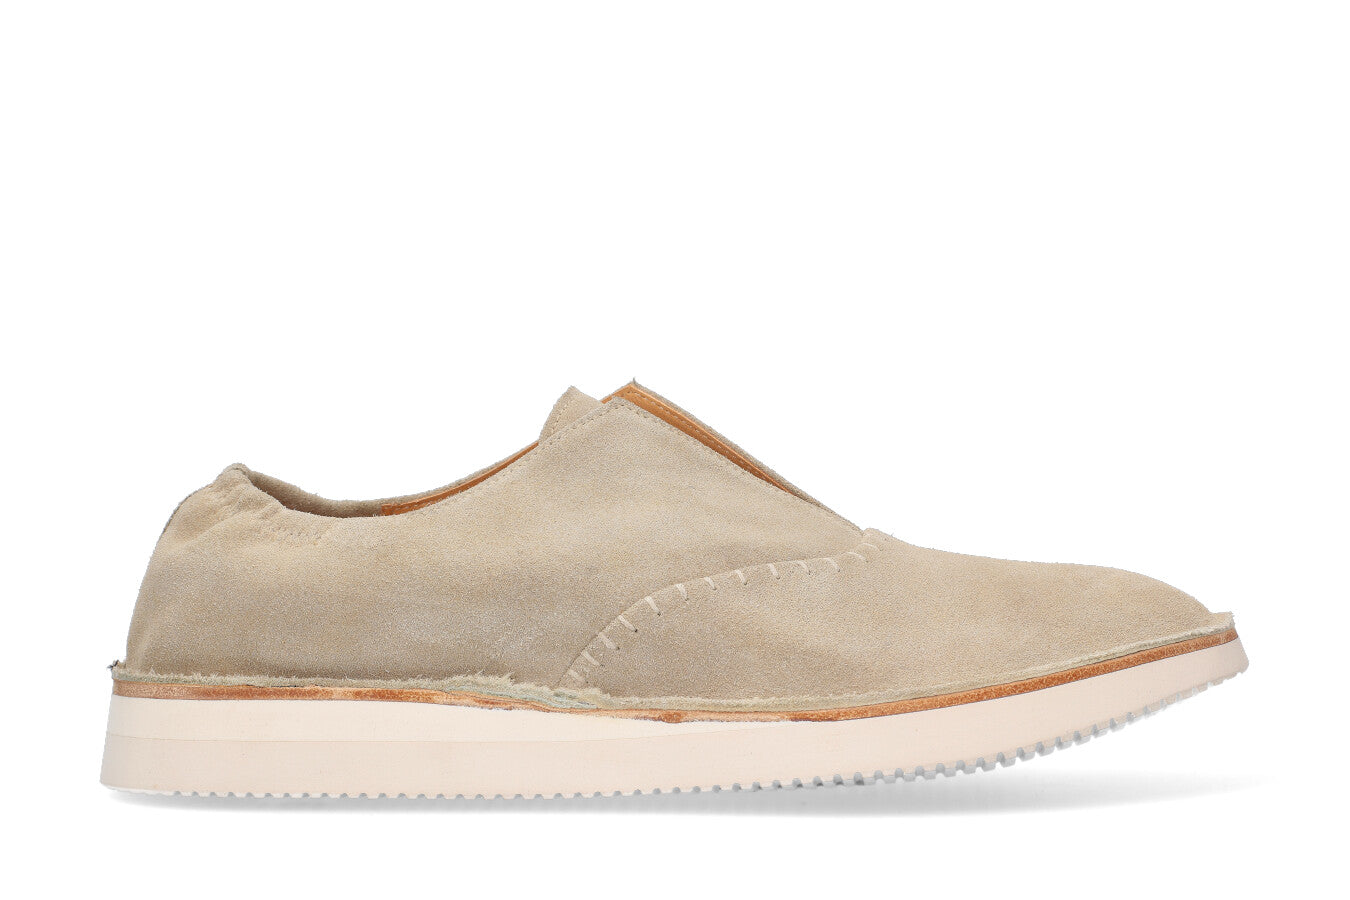 Premiata cobo geyser grey suede shoe with white sole